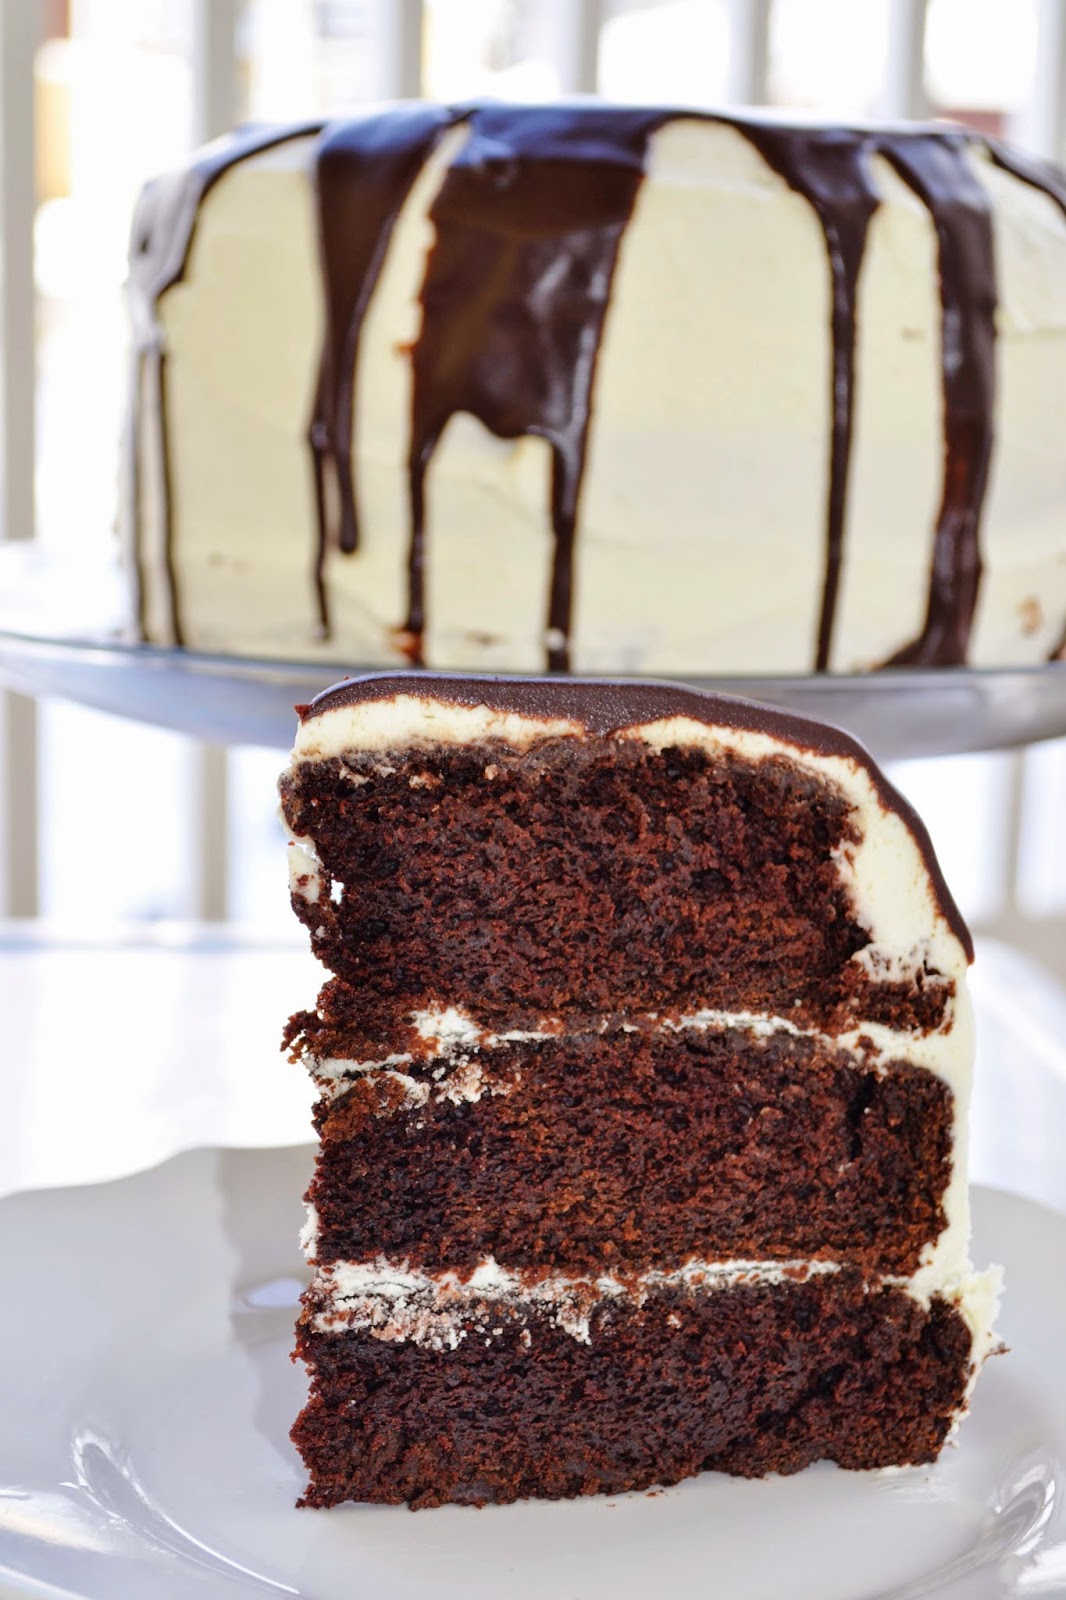 Sweet Morris: Tuxedo Cake